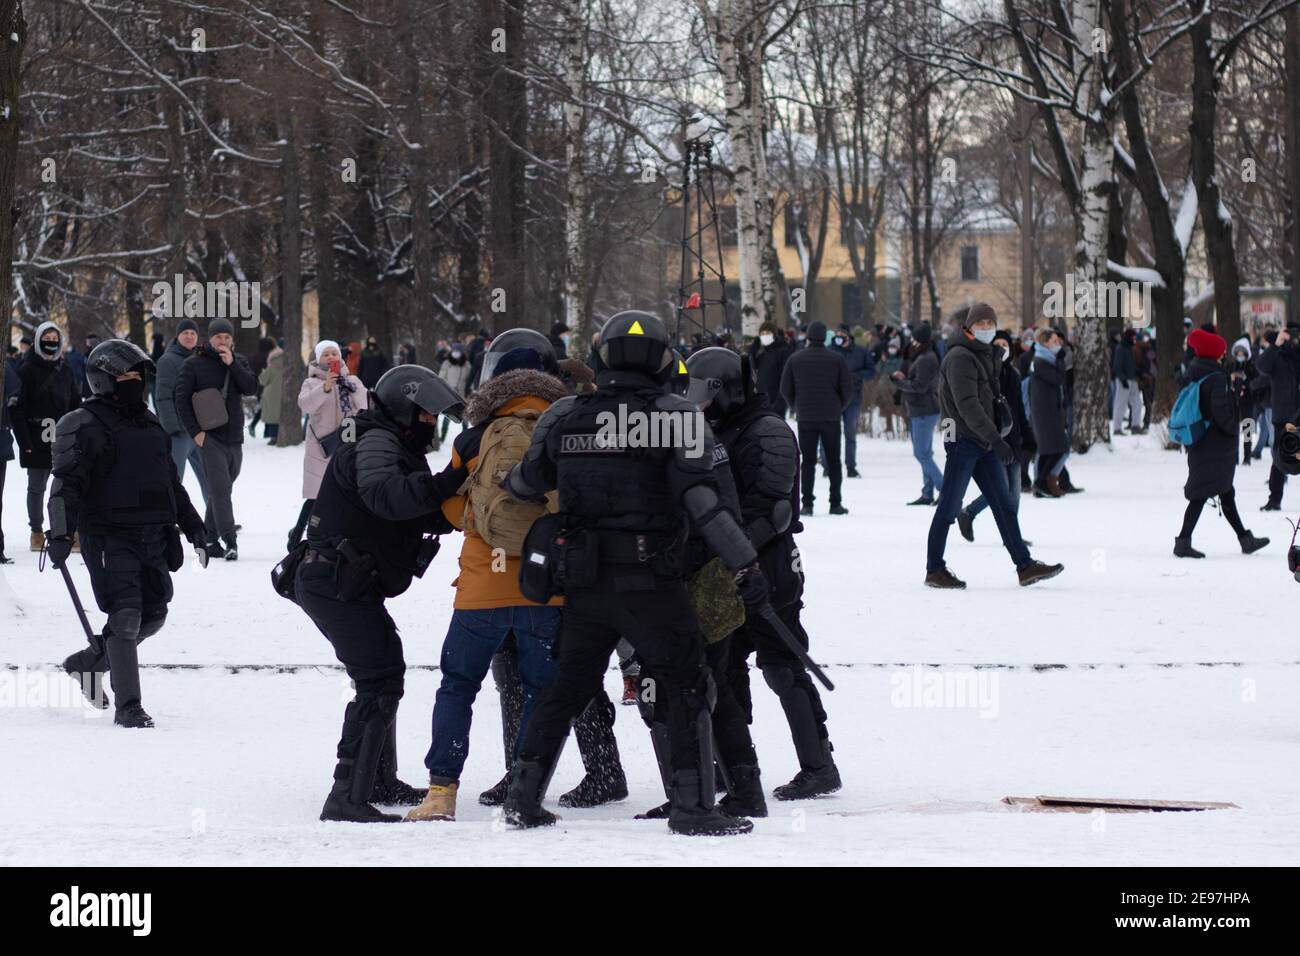 Saint Petersburg, Russia - 31 January 2021: Riot police crowd arresting man on street, Illustrative Editorial Stock Photo